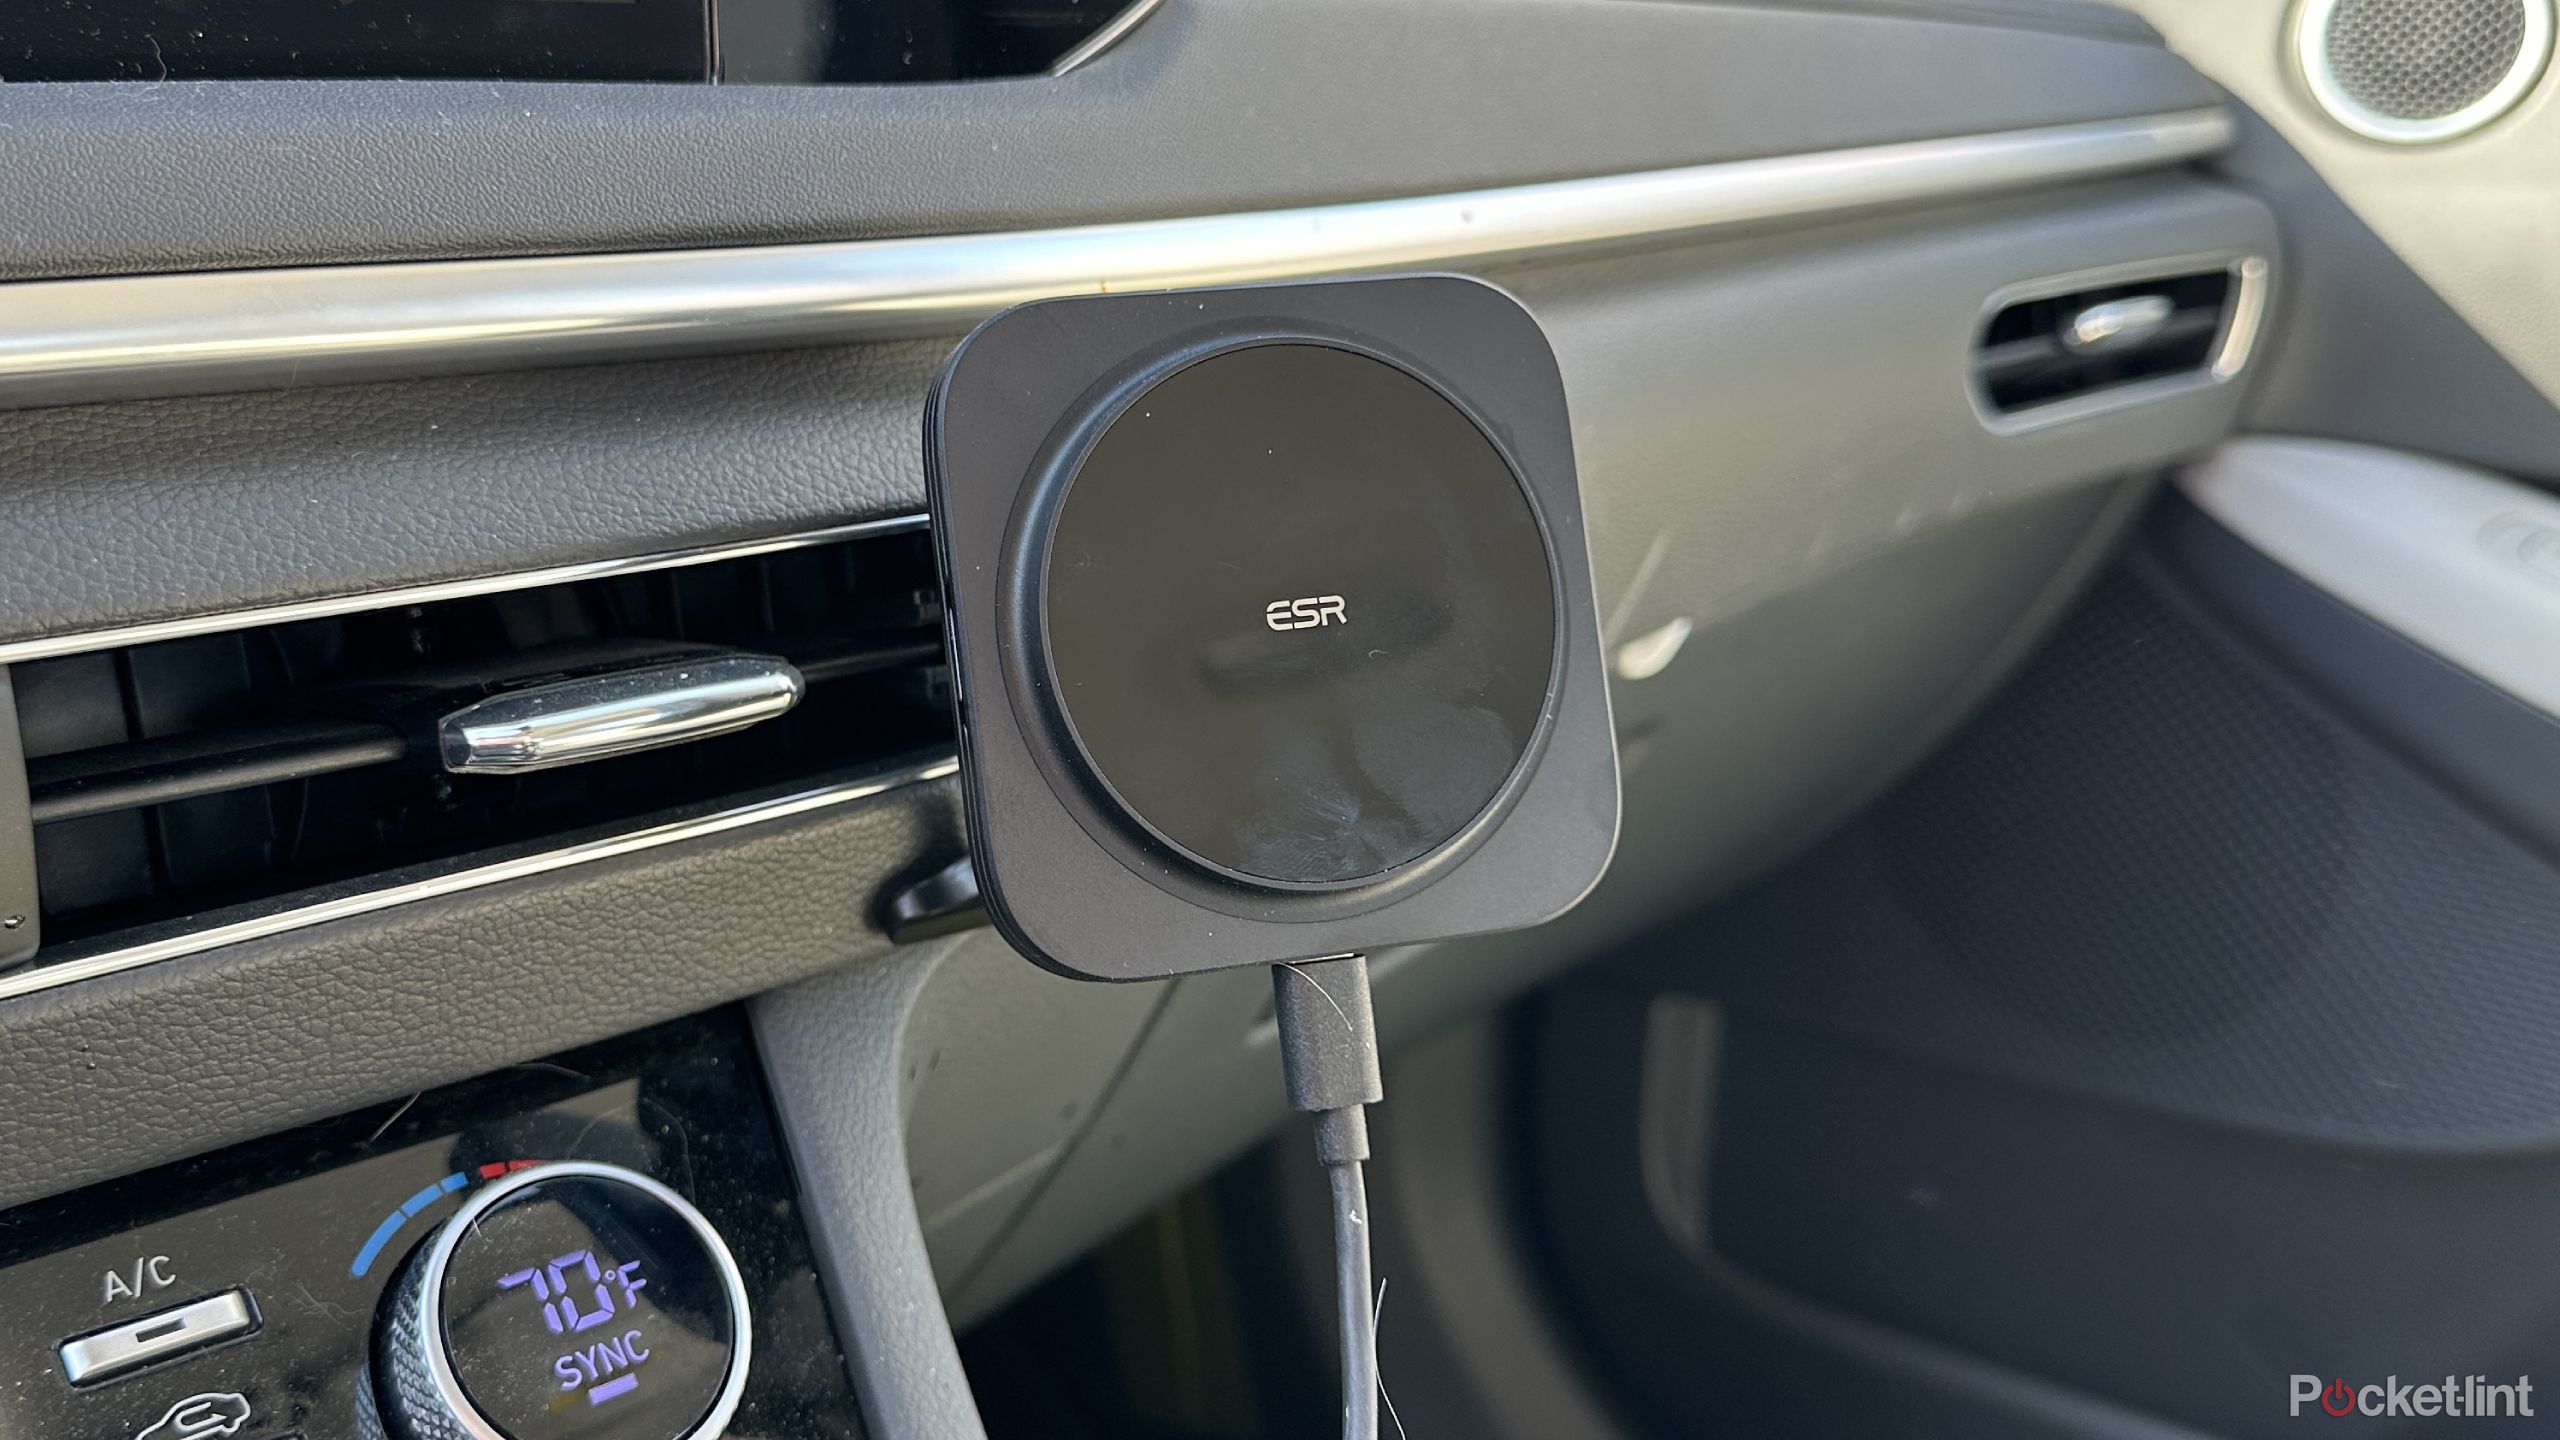 esr-qi2-15w-car-mount-charger-review